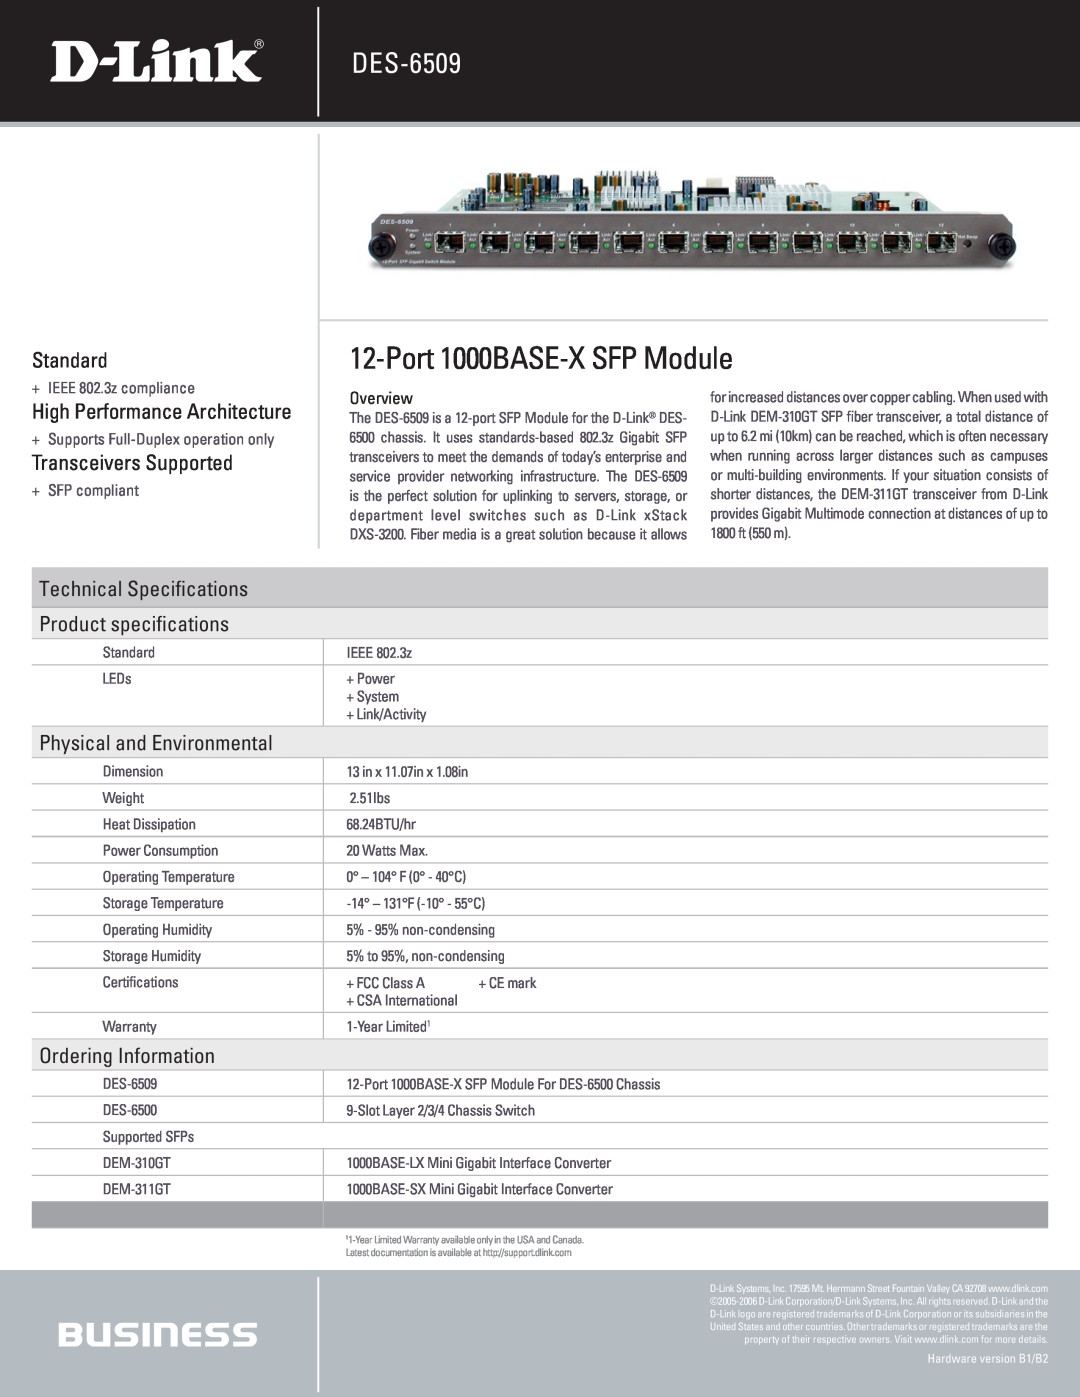 D-Link DES-6509 warranty Port 1000BASE-X SFP Module, Standard, High Performance Architecture, Transceivers Supported 